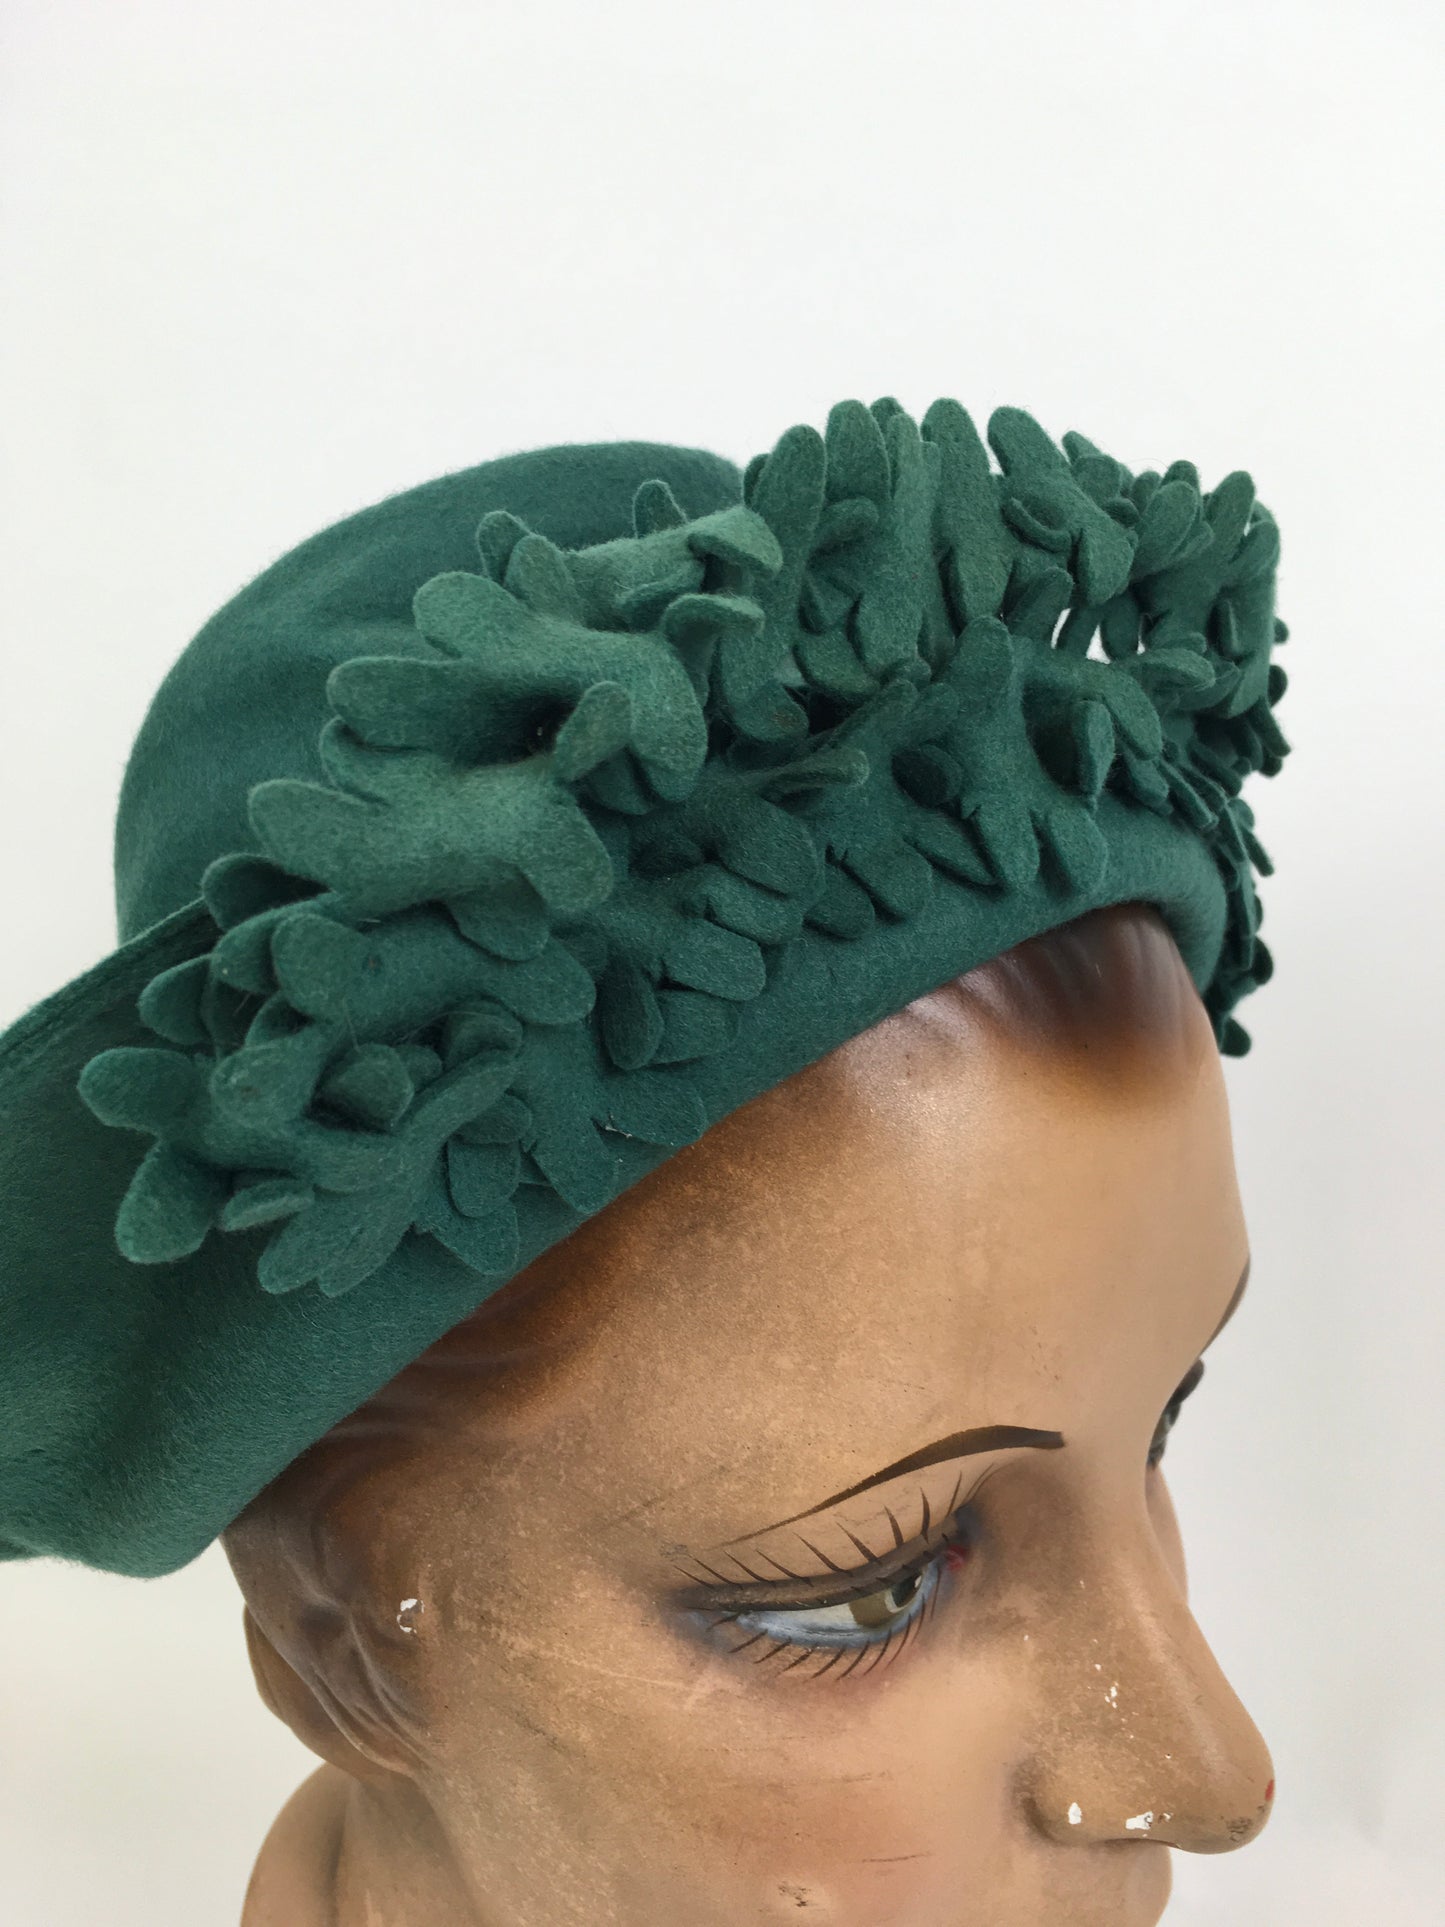 Original 1940’s Stunning Felt Hat with Floral Trails - In A Soft Eau De Nil Green